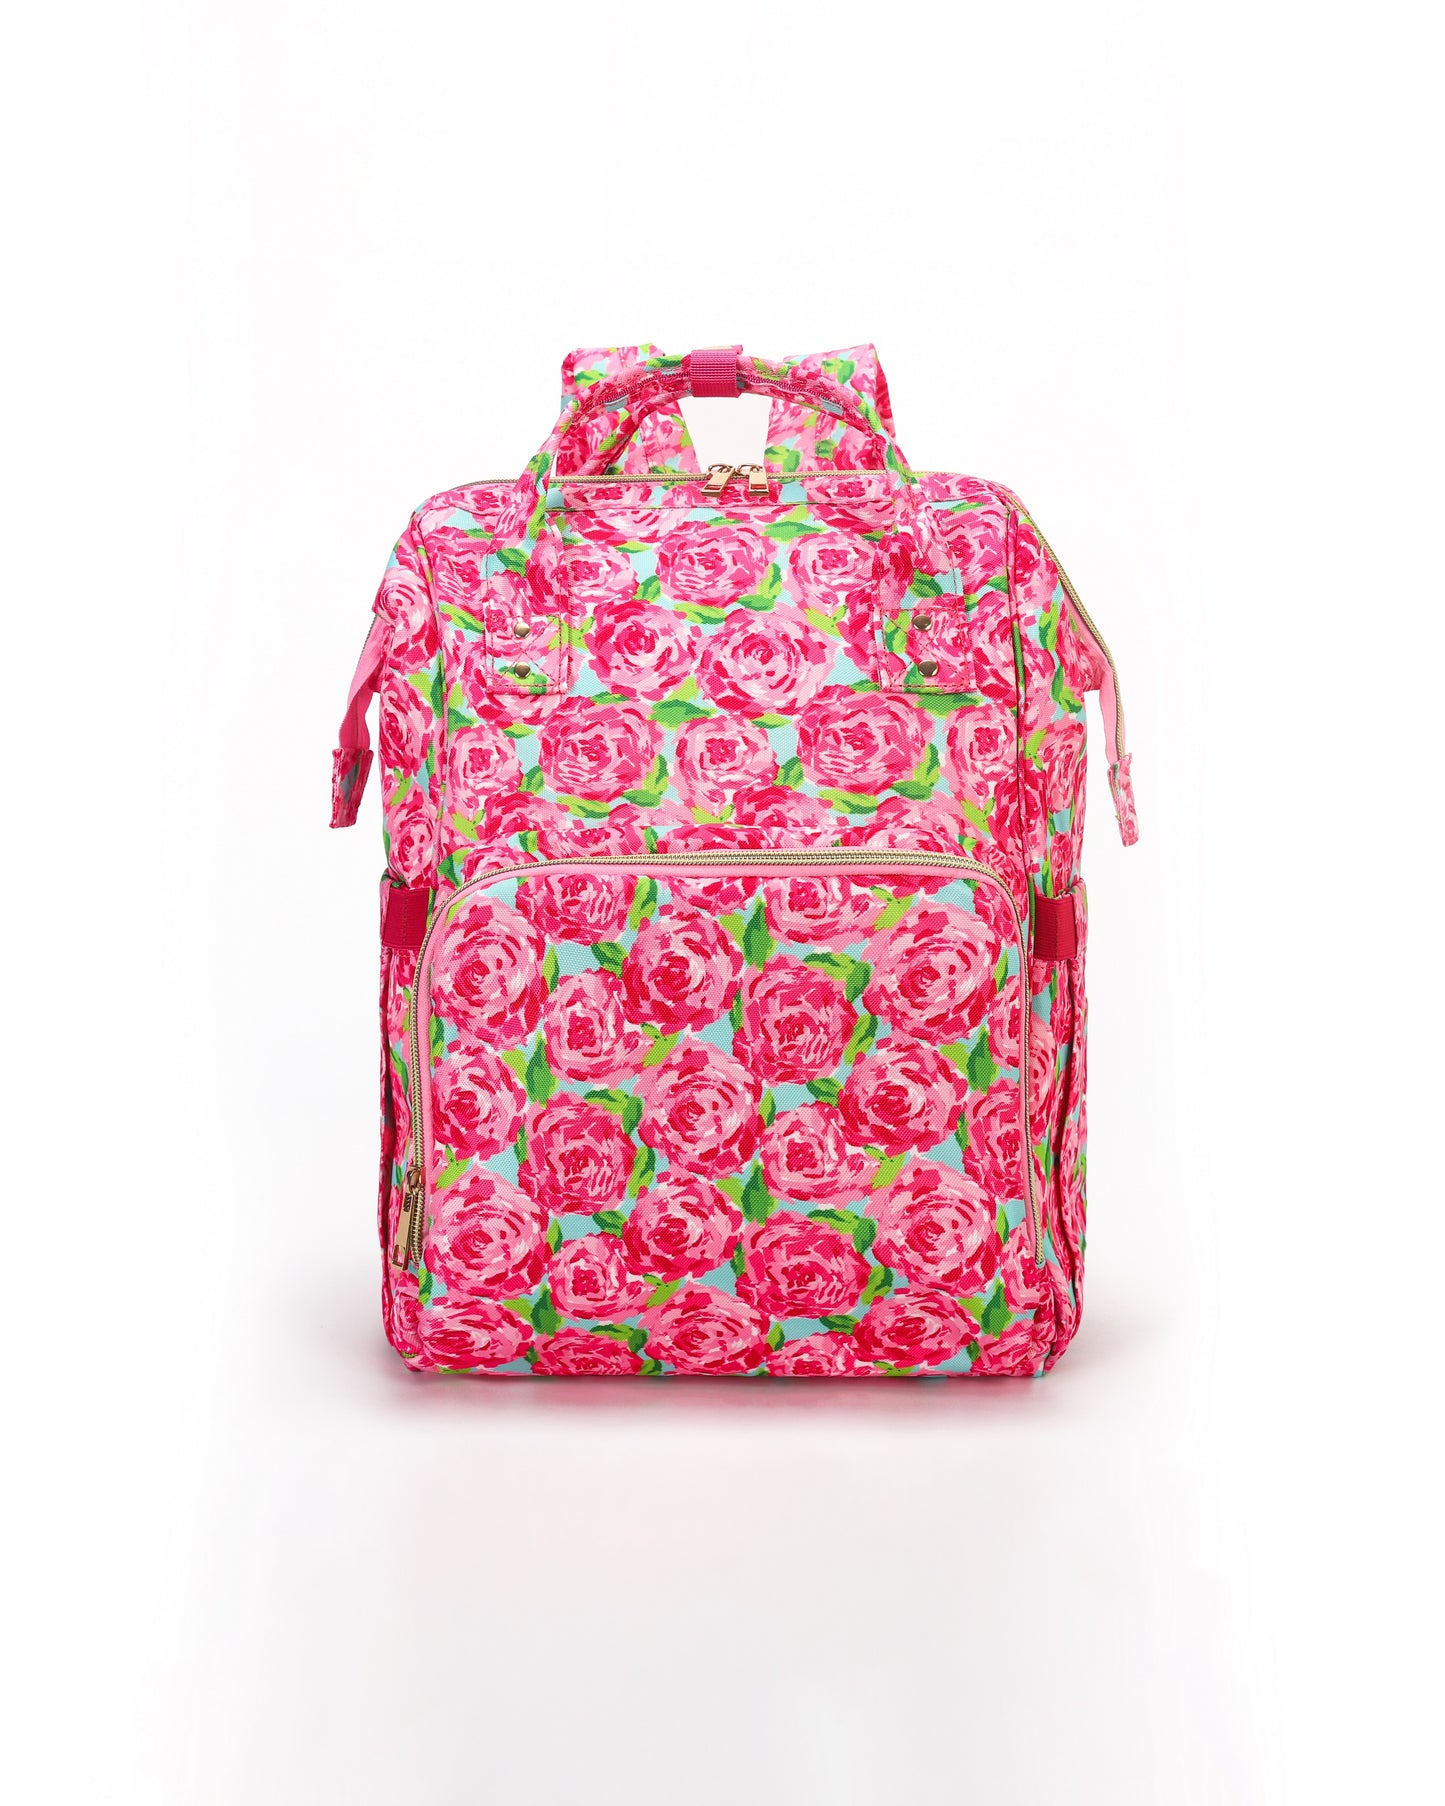 Floral Diaper backpack